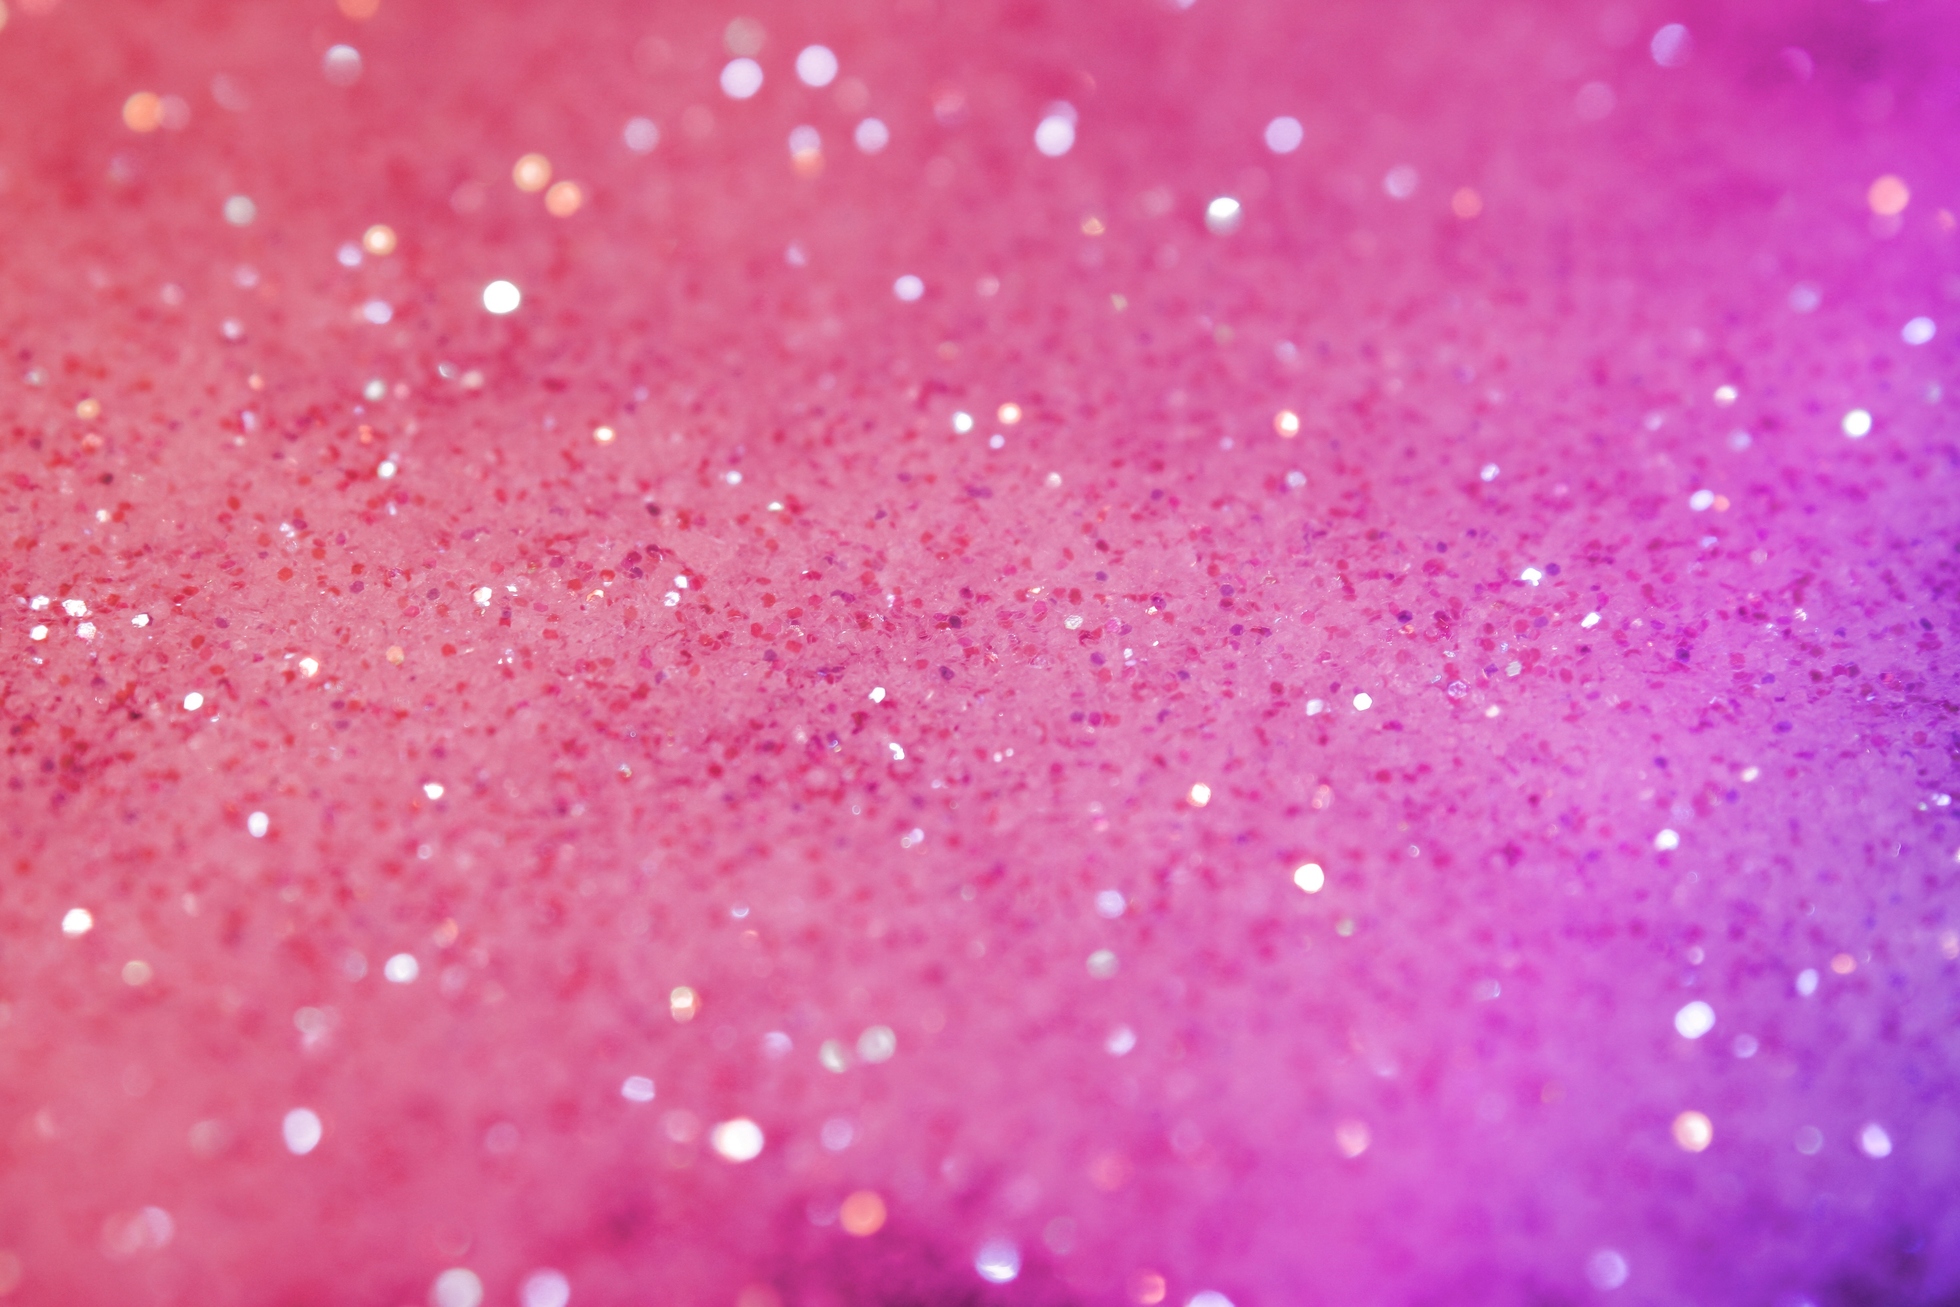 77+] Backgrounds Glitter - WallpaperSafari